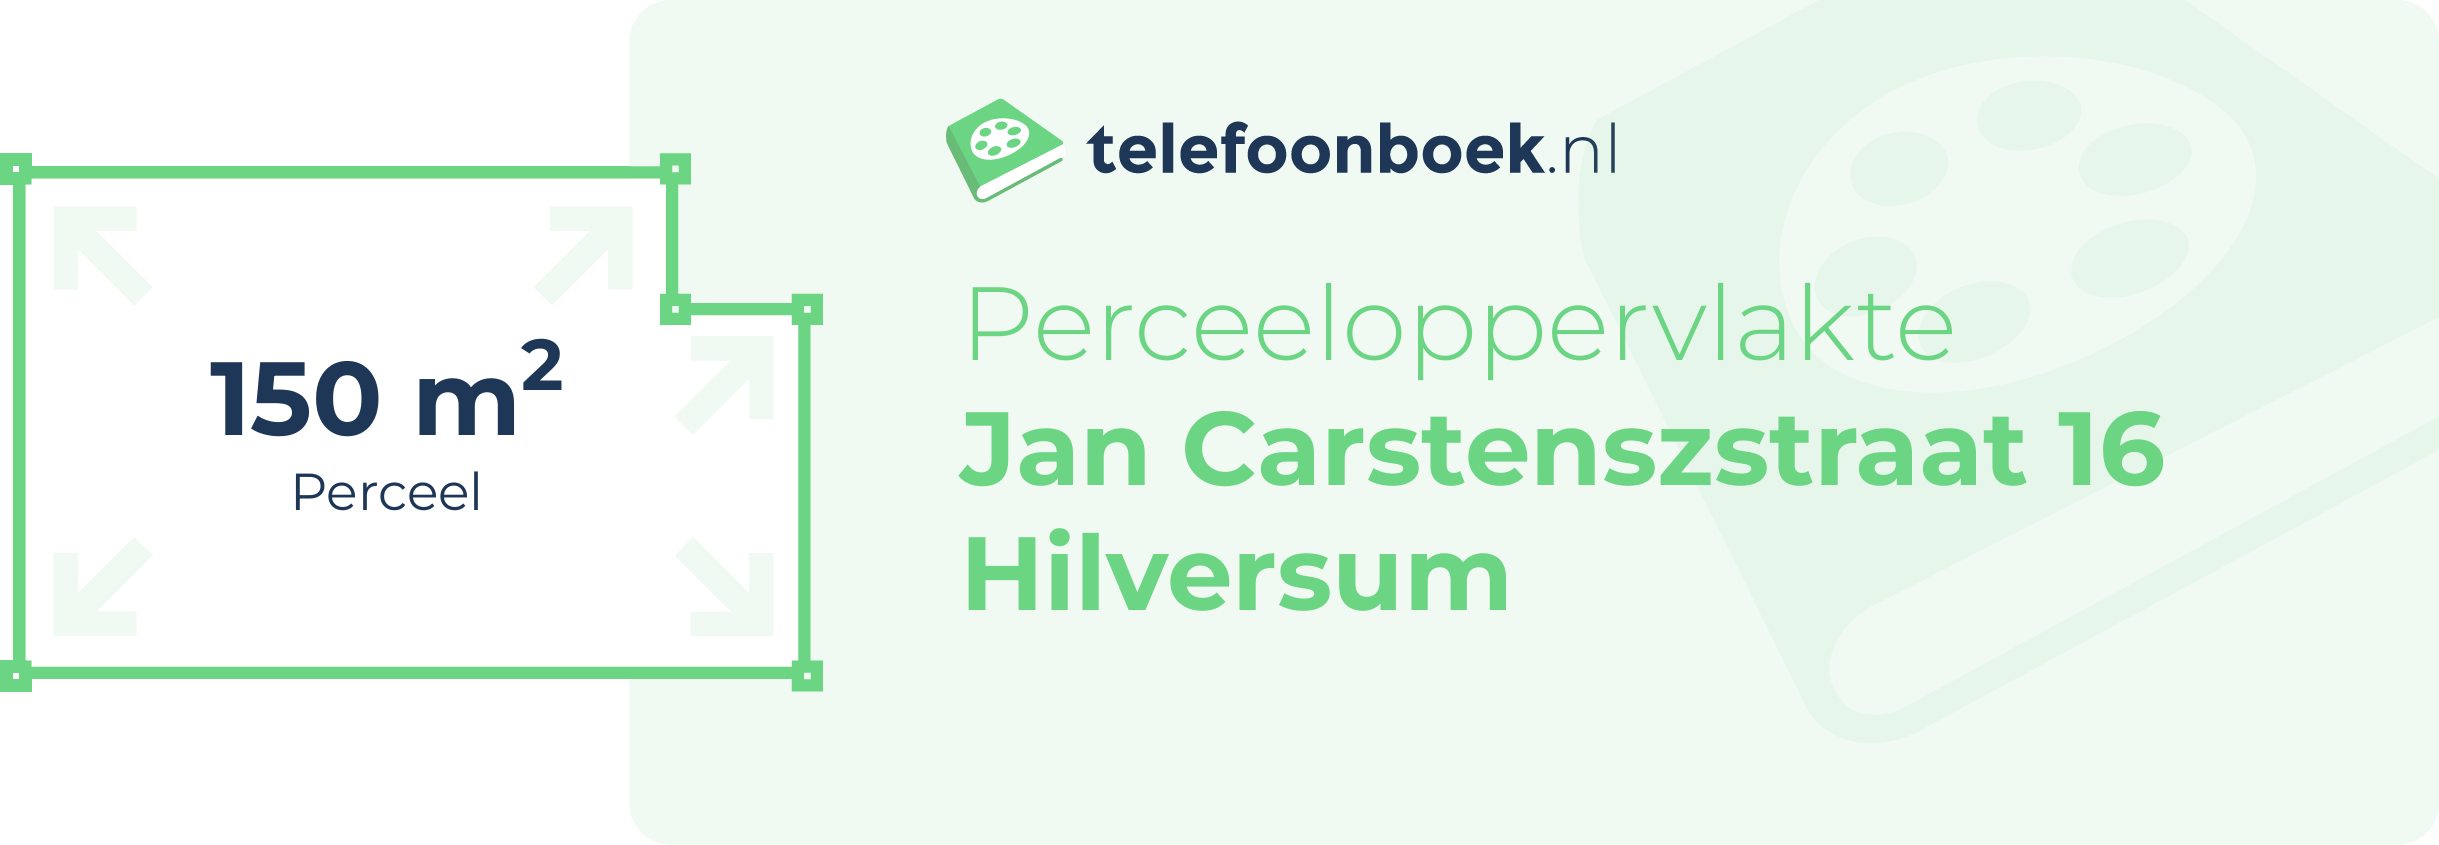 Perceeloppervlakte Jan Carstenszstraat 16 Hilversum